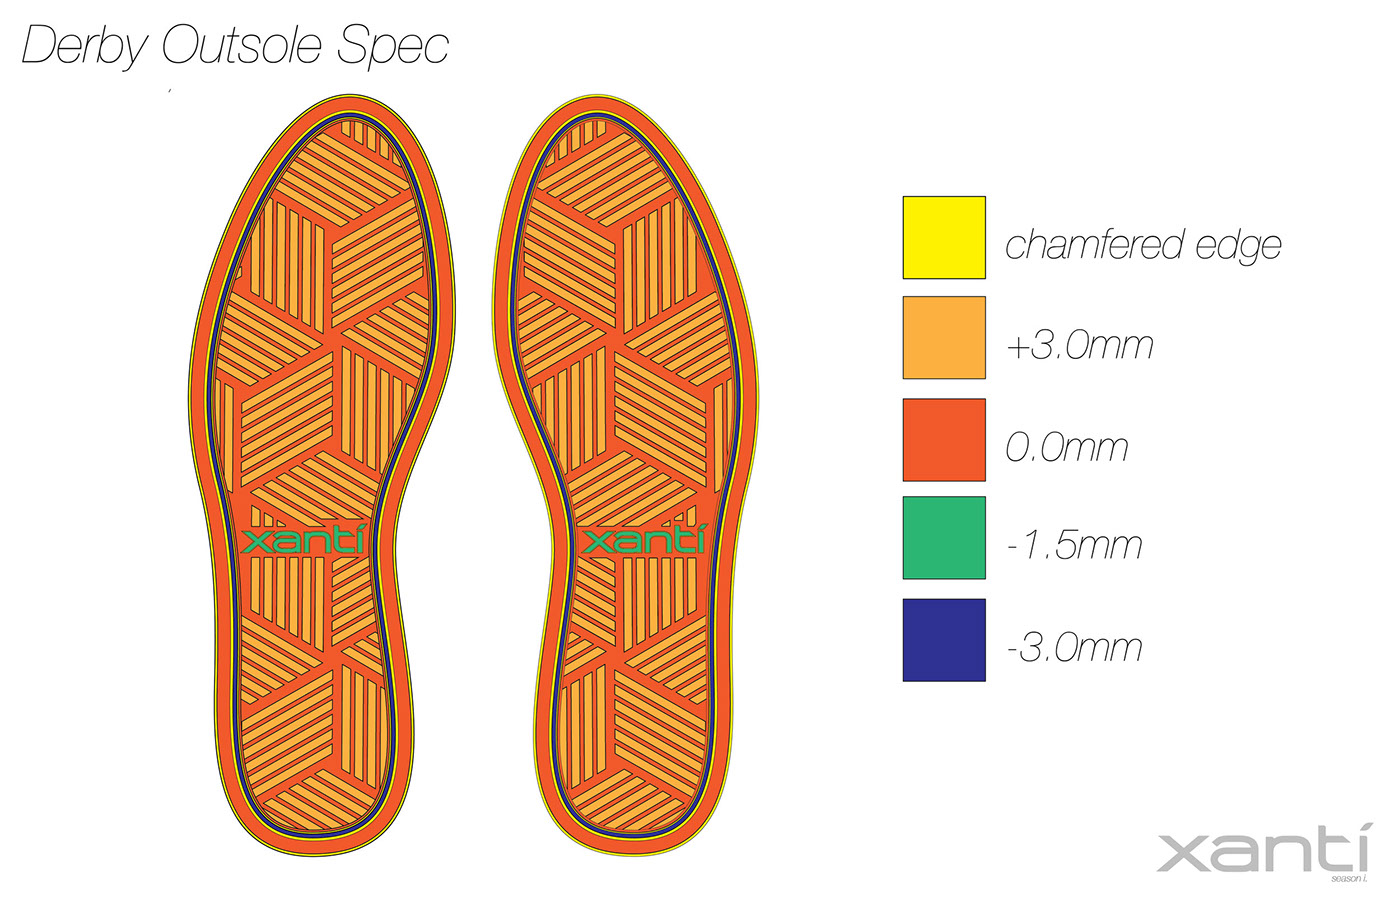 footwear branding  product design  design